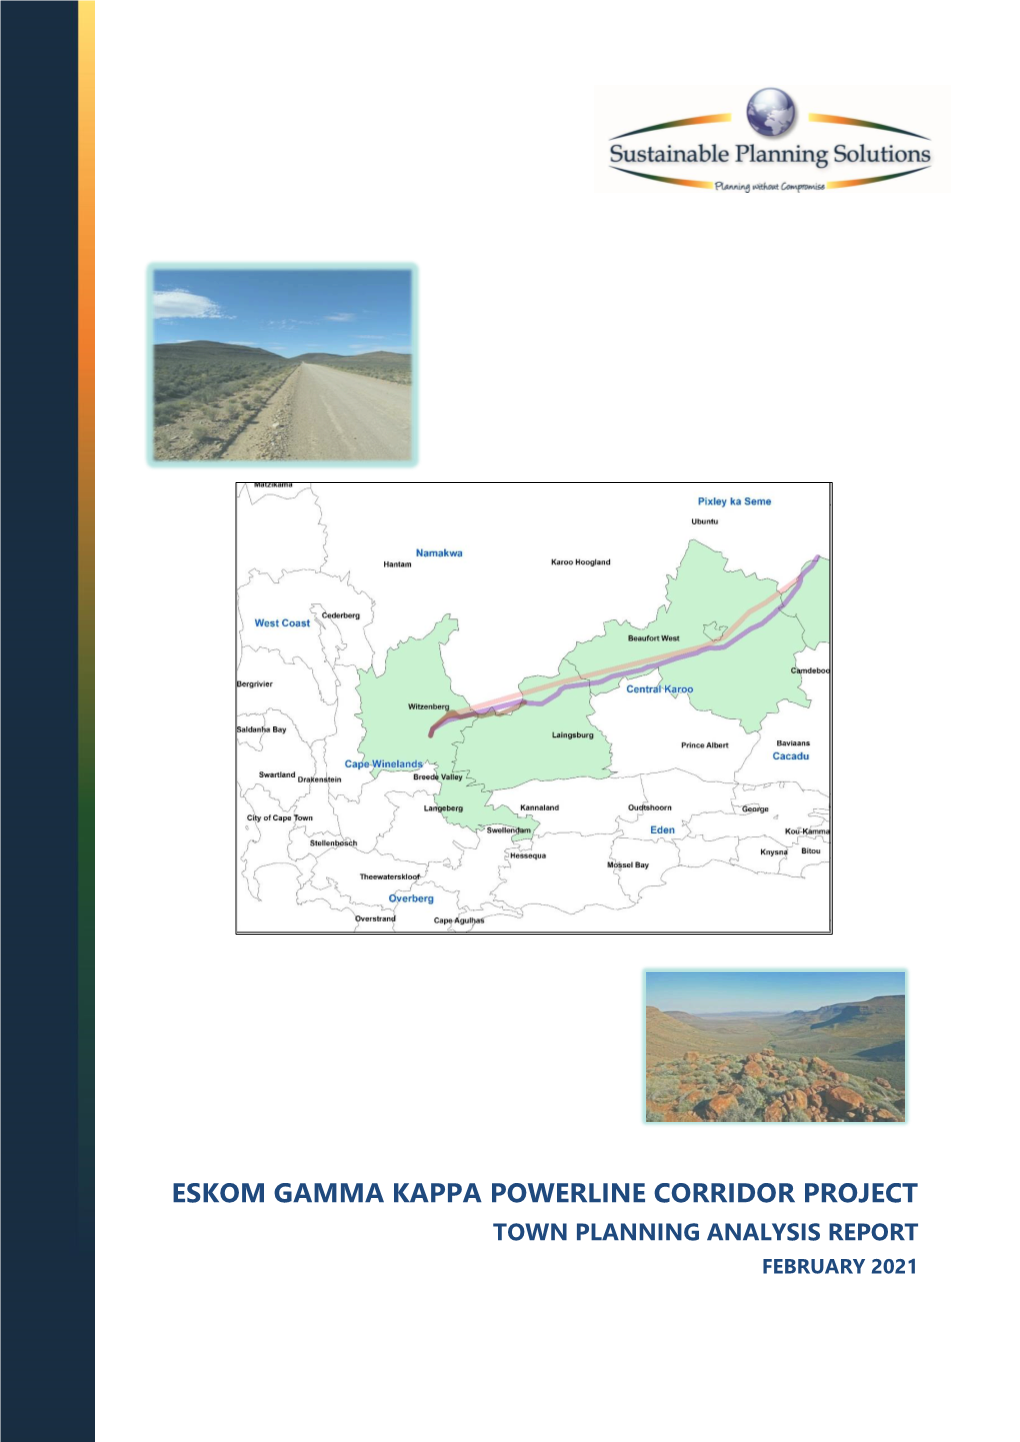 Eskom Gamma Kappa Powerline Corridor Project Town Planning Analysis Report February 2021 Town Planning Analysis Report